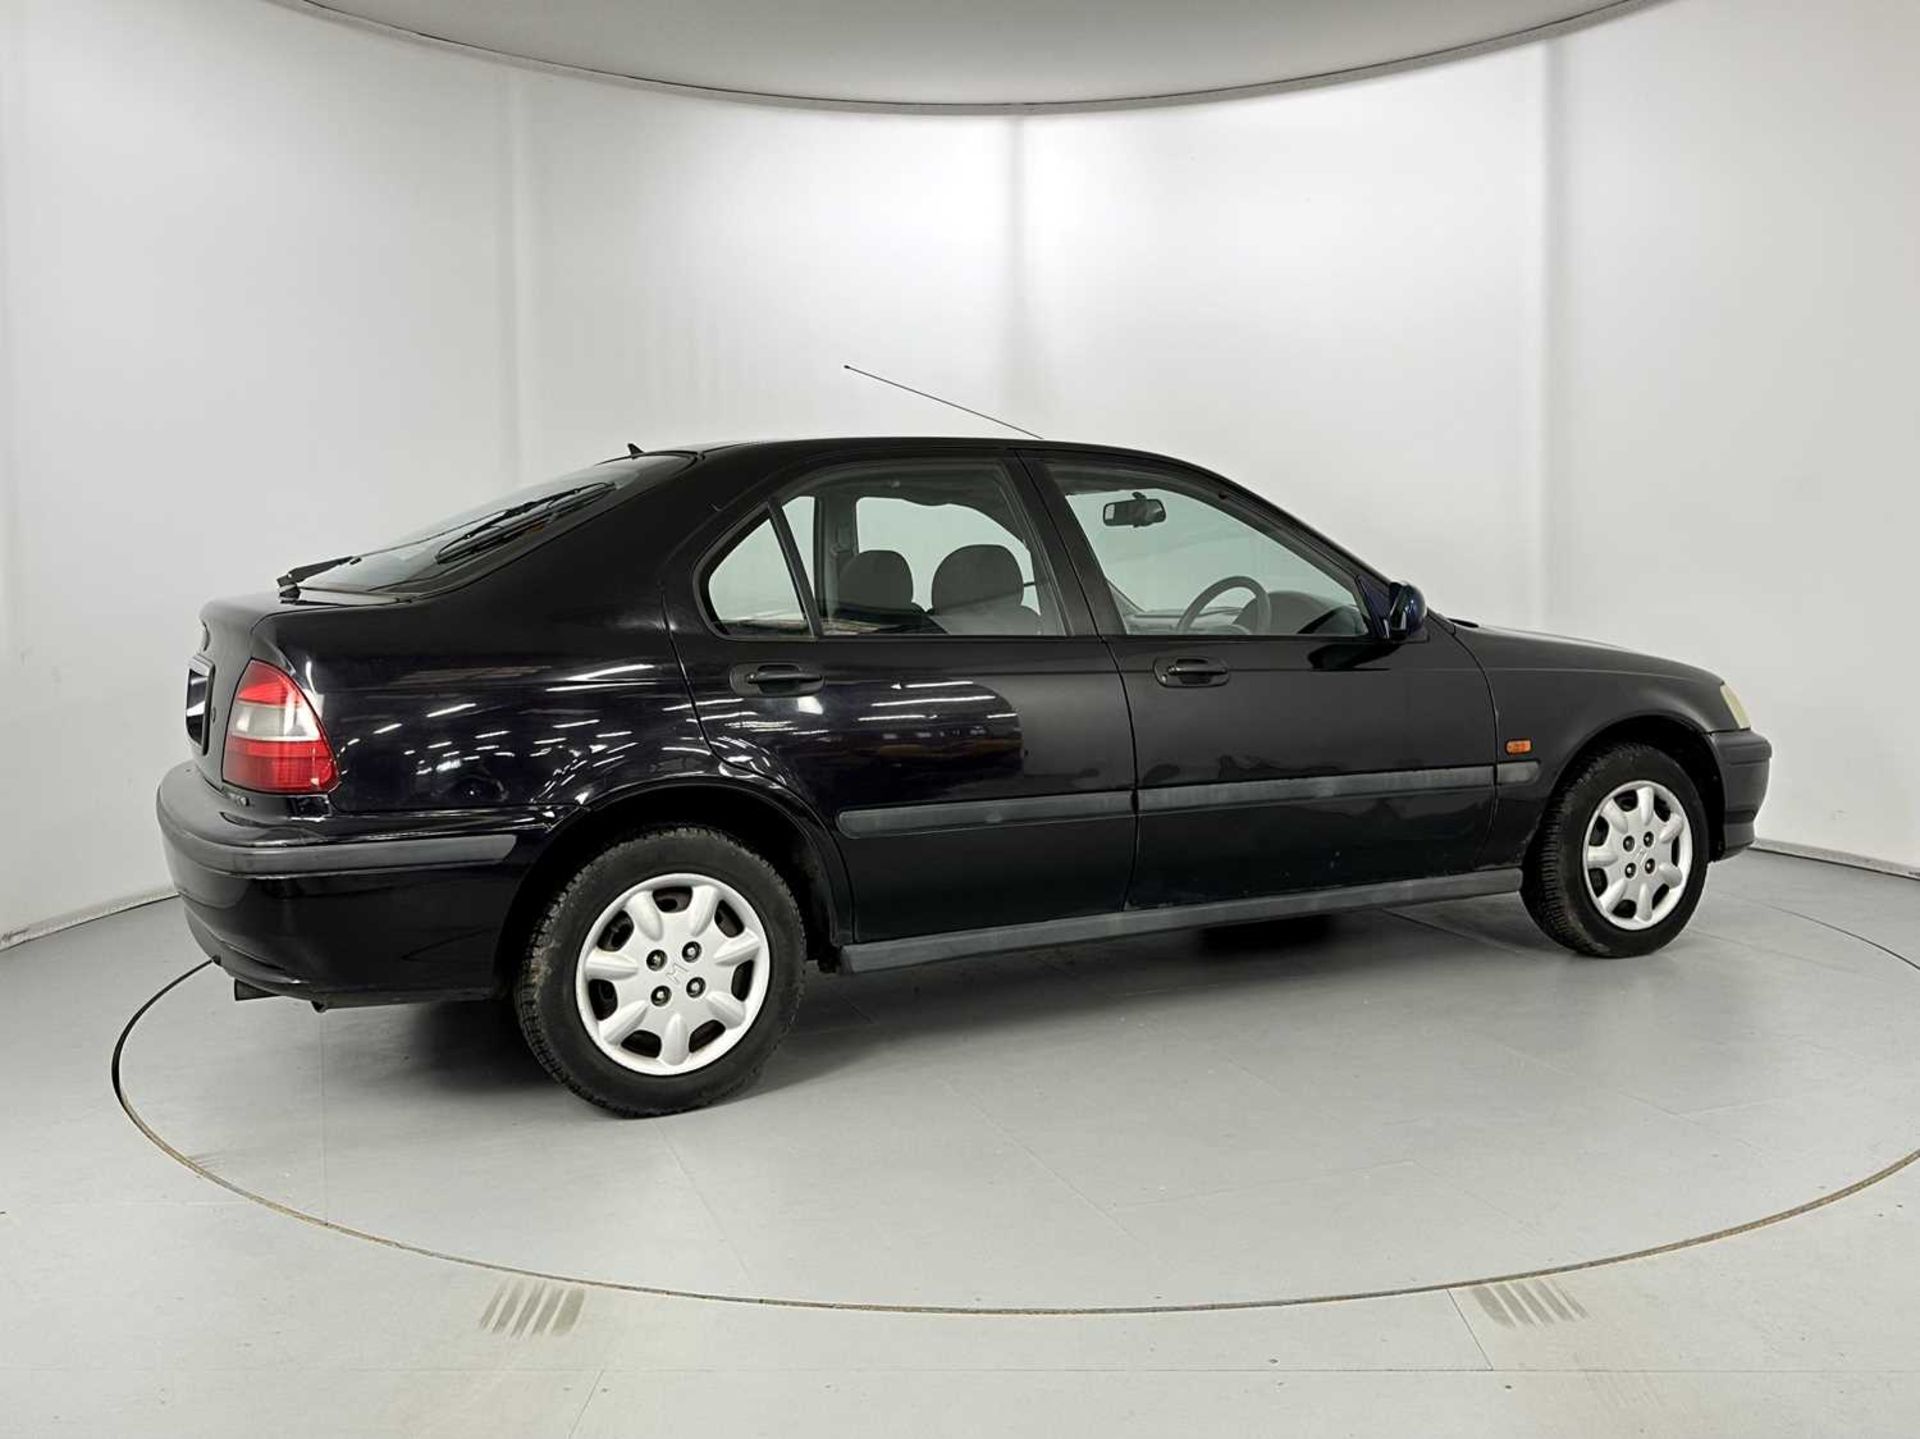 1999 Honda Civic - Image 10 of 34